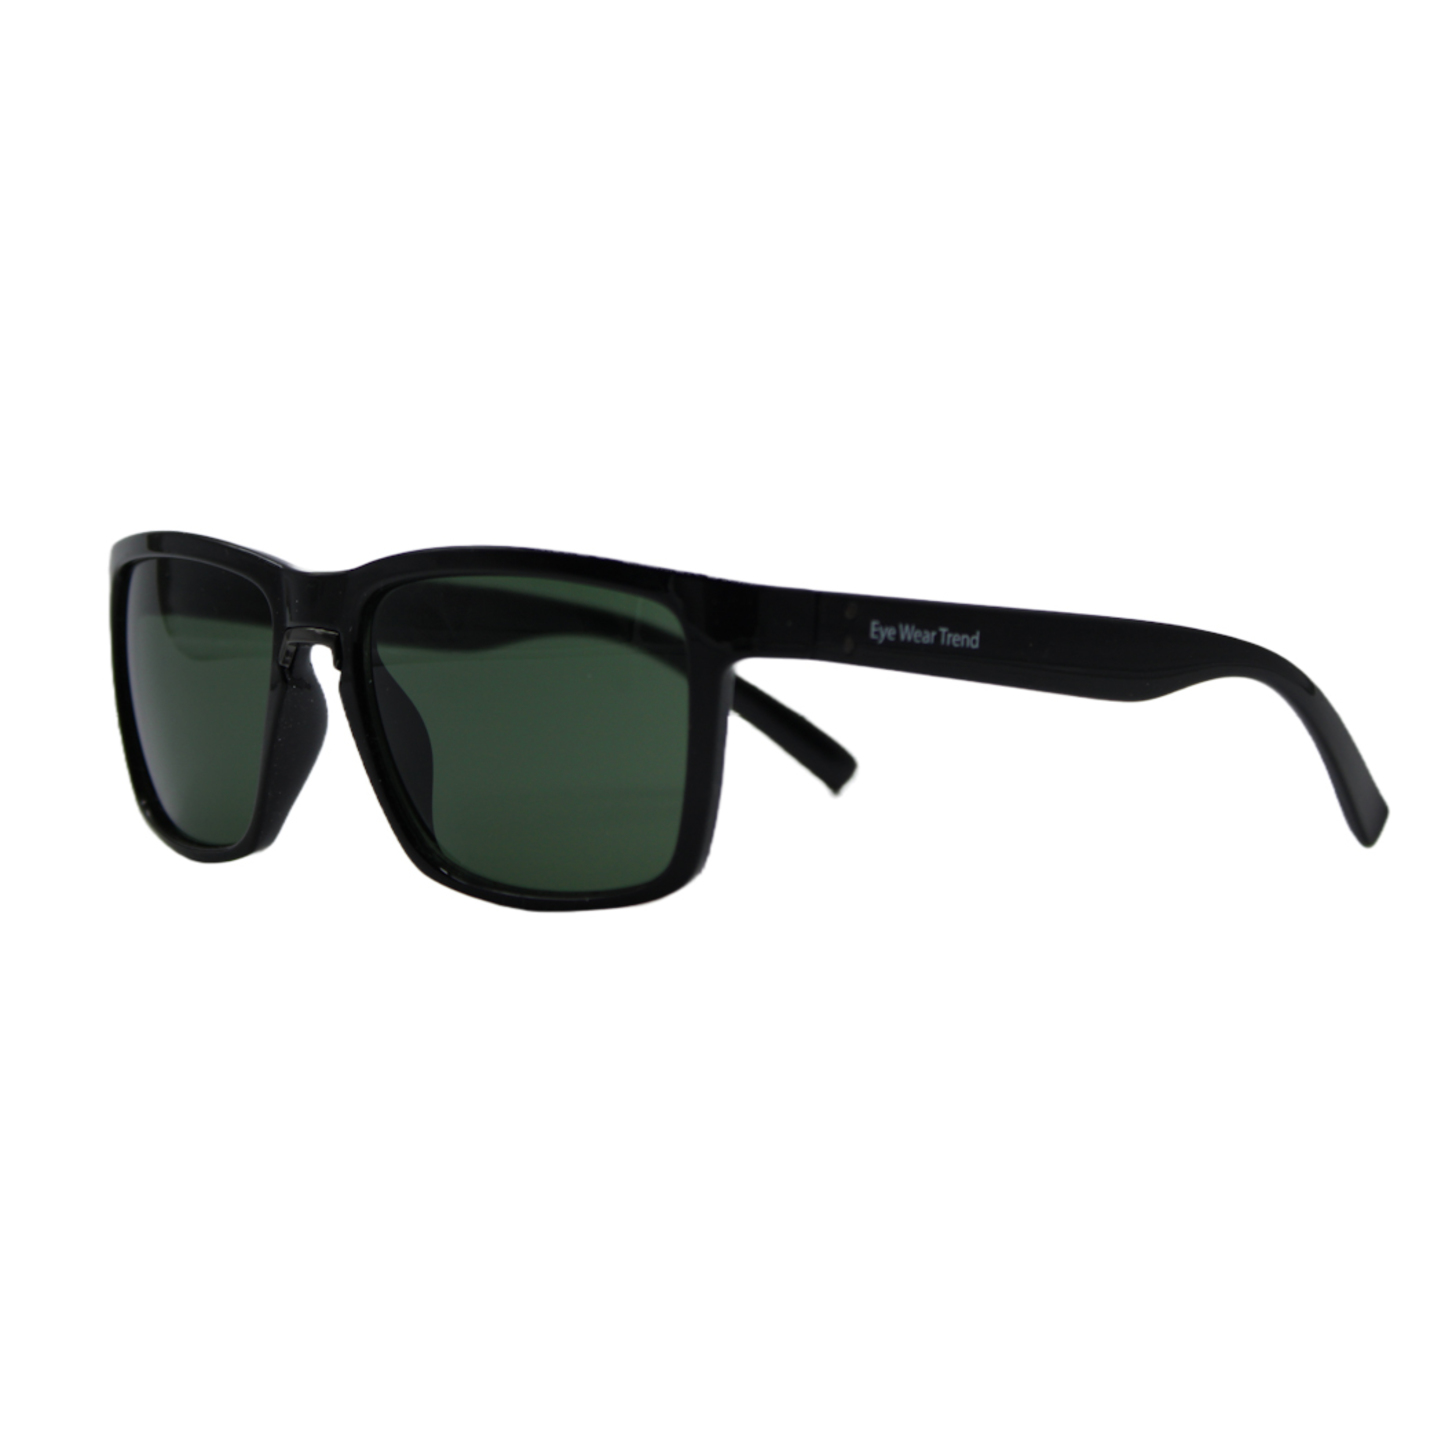 Black Square Stylish Sunglasses For Men and Women